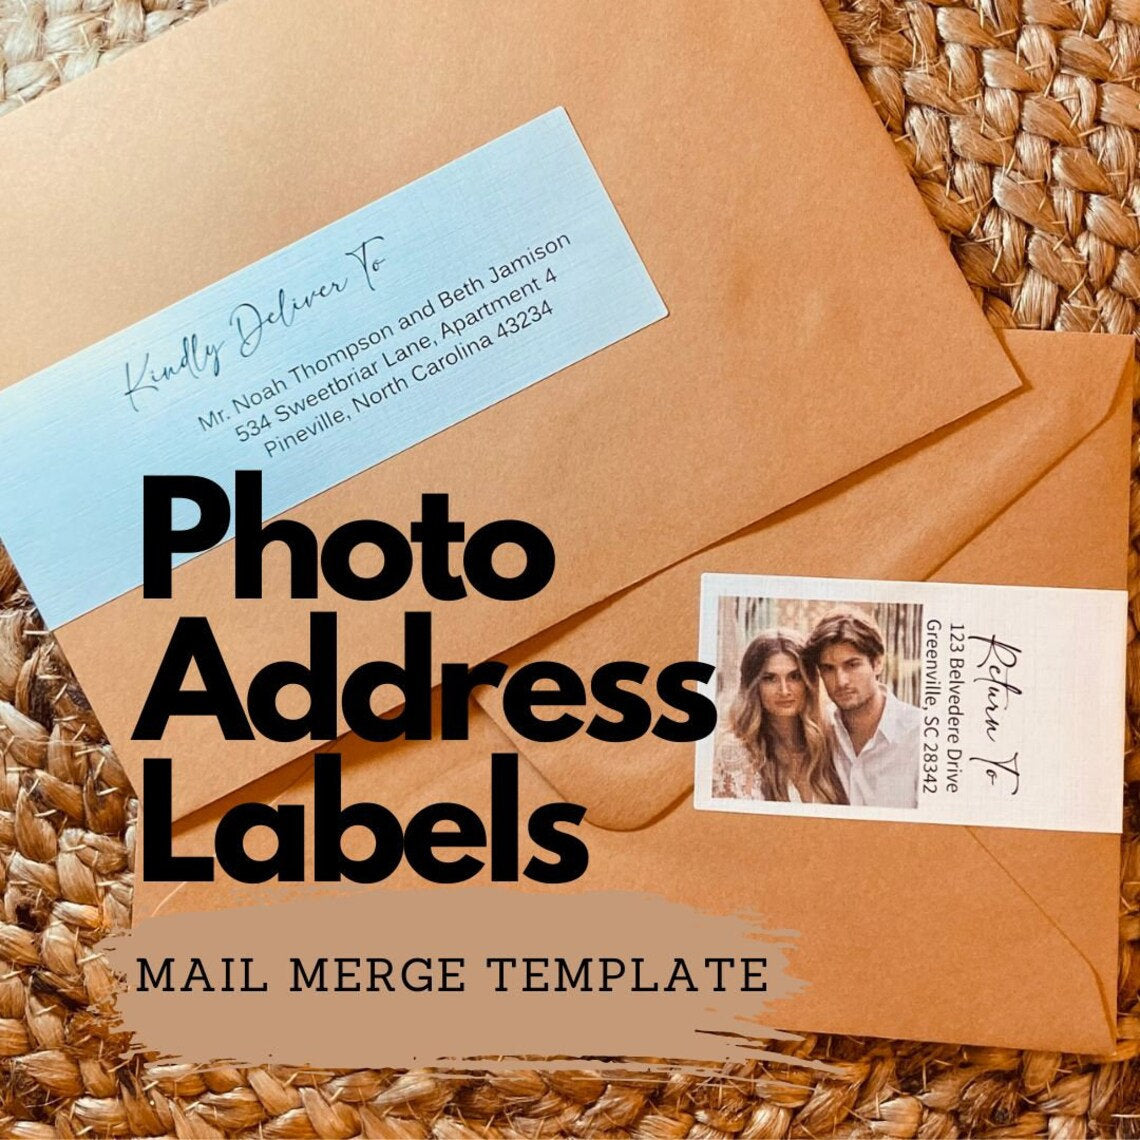 Photo Address Label Template, Envelope Template, Mail Merge Address Label, Address Label, Editable Template, Instant, MOD